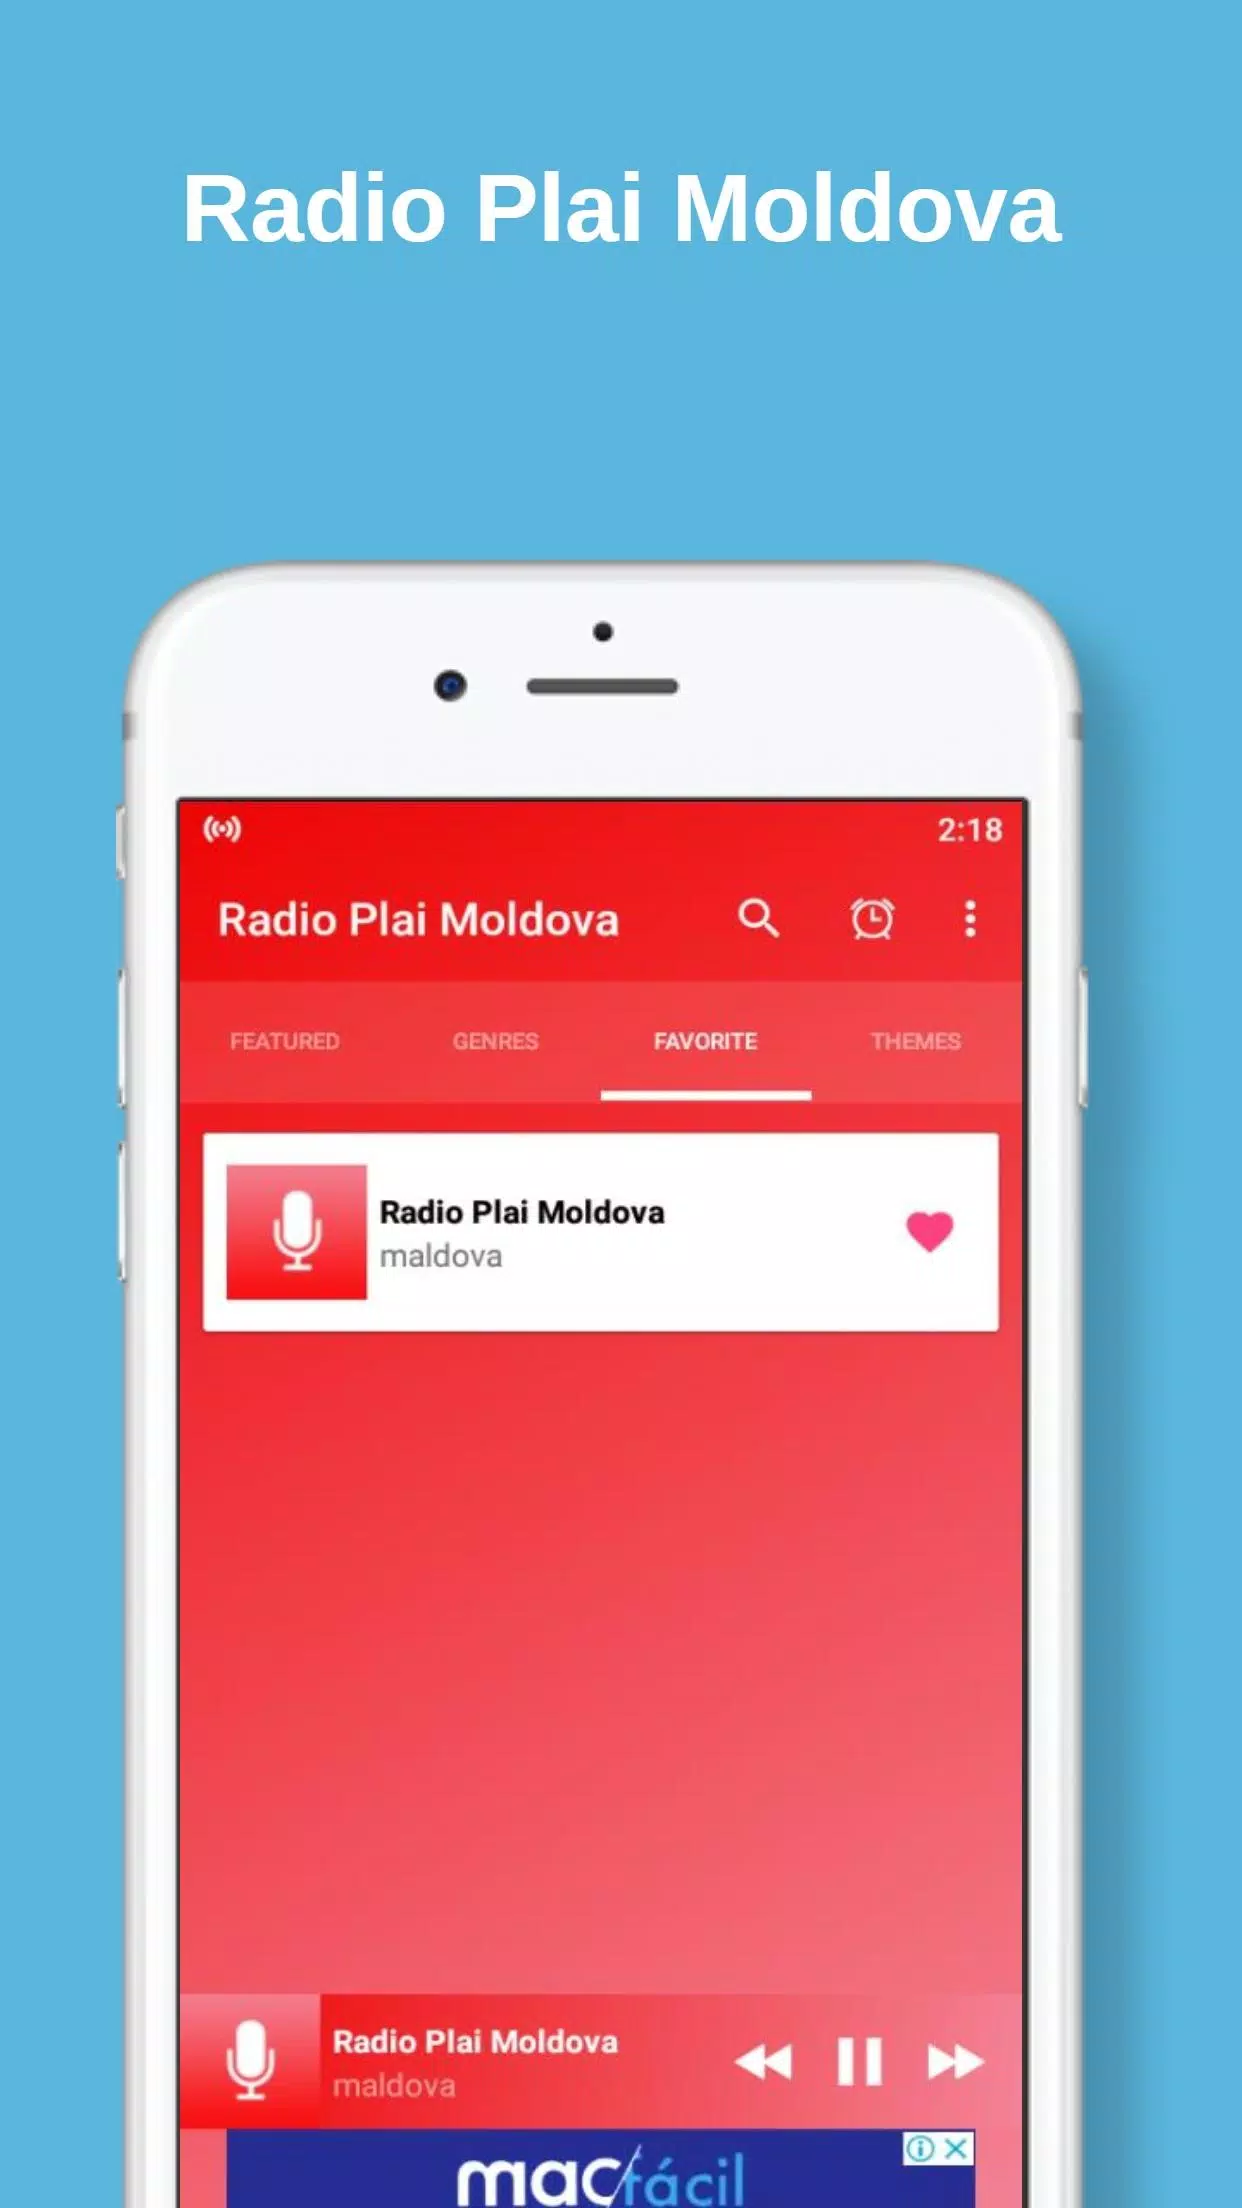 MD radio plai moldova APK for Android Download